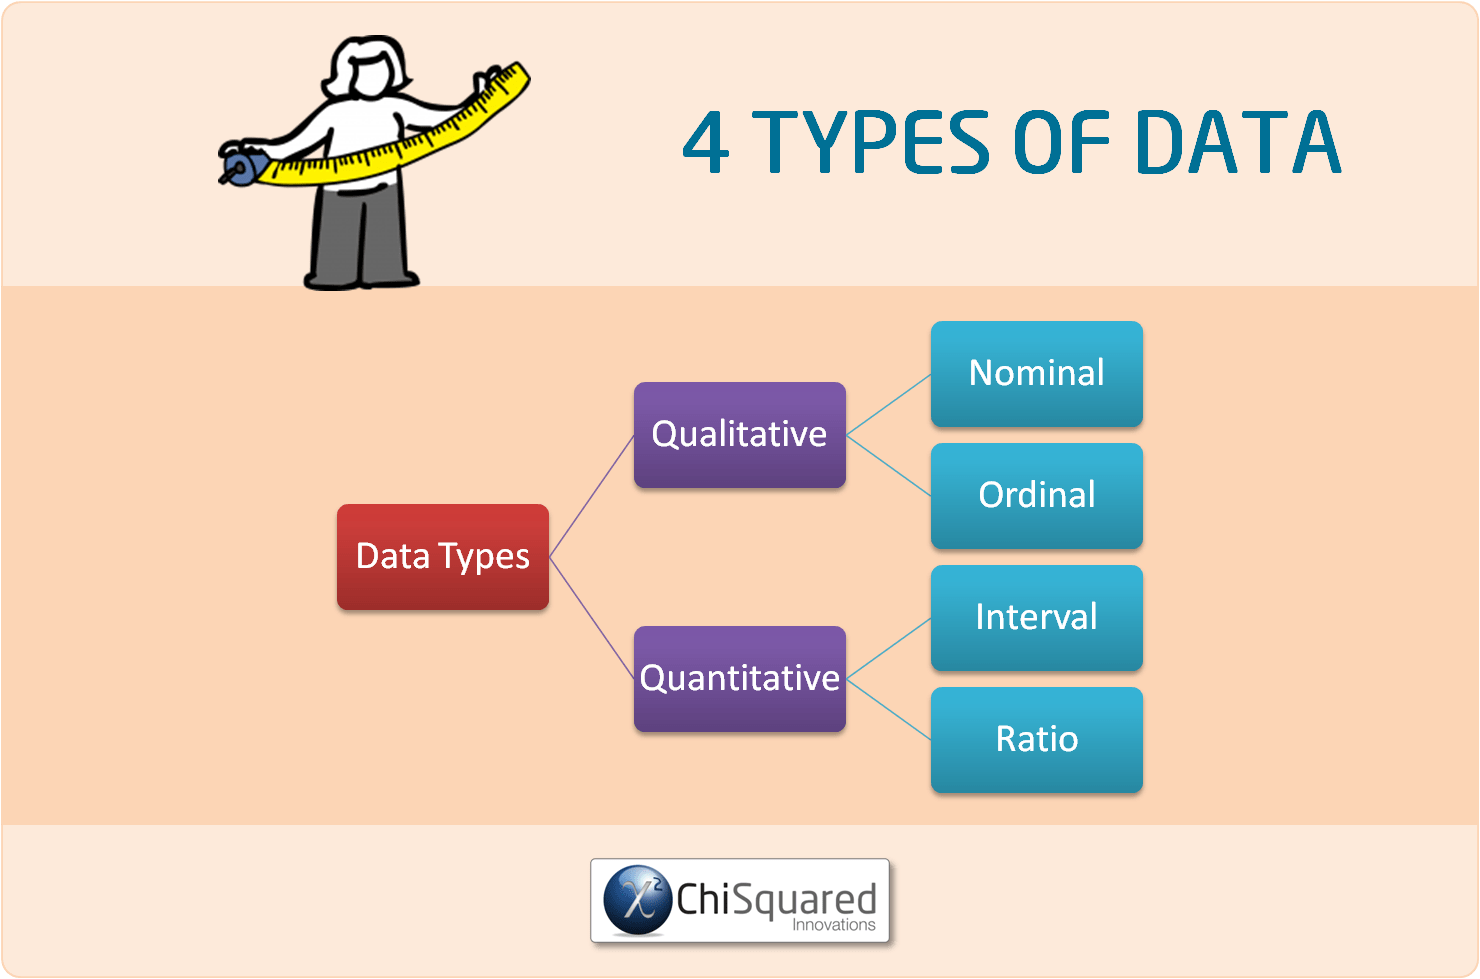 4 Types of Data - Ratio, Interval, Ordinal, Nominal